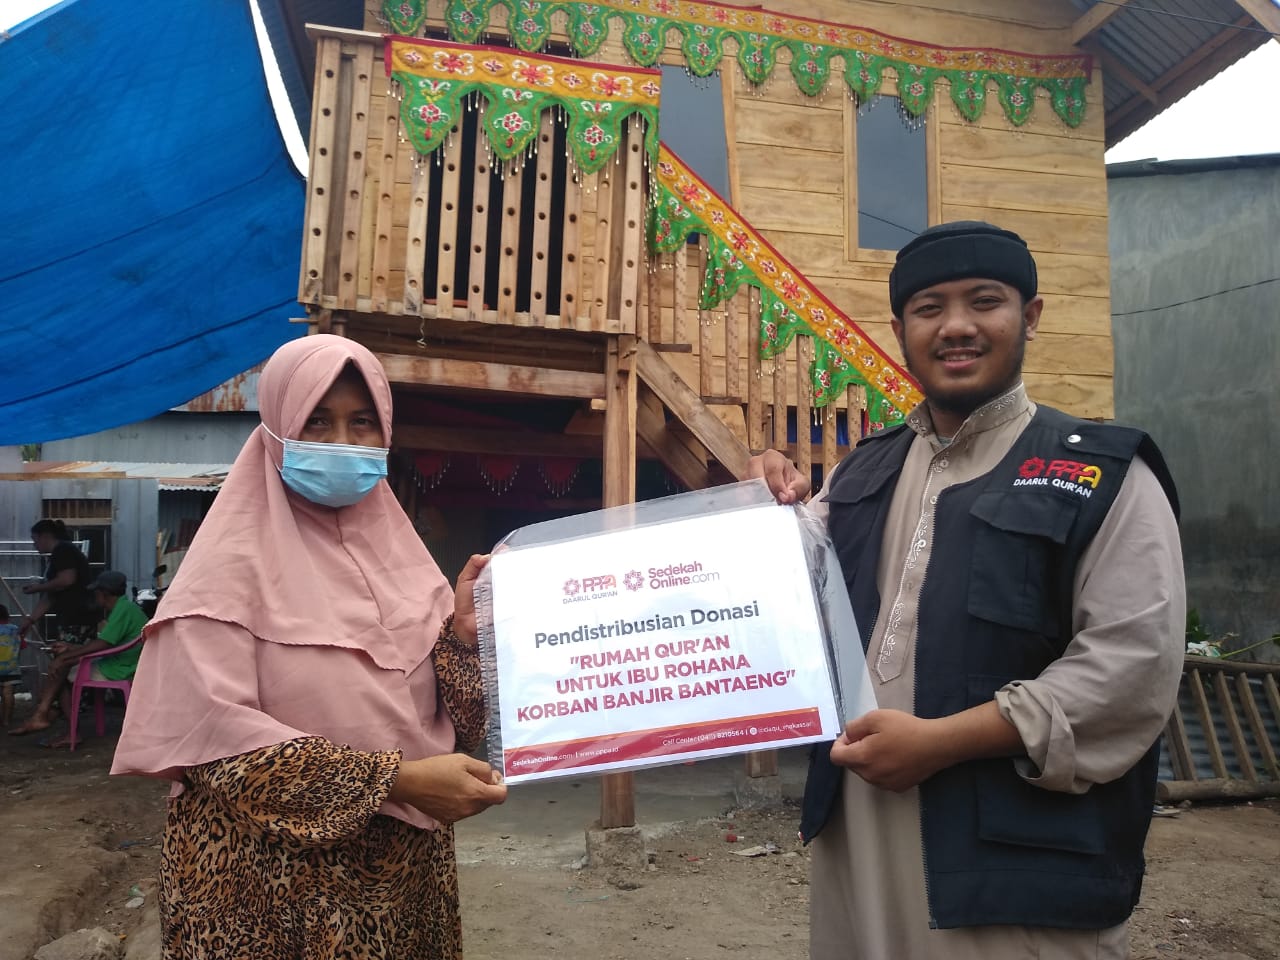 PPPA Daarul Qurâ€™an Makassar Bersama Sedekah Online Salurkan Bantuan untuk Ibu Rohana, Korban Banjir Bandang di Bantaeng